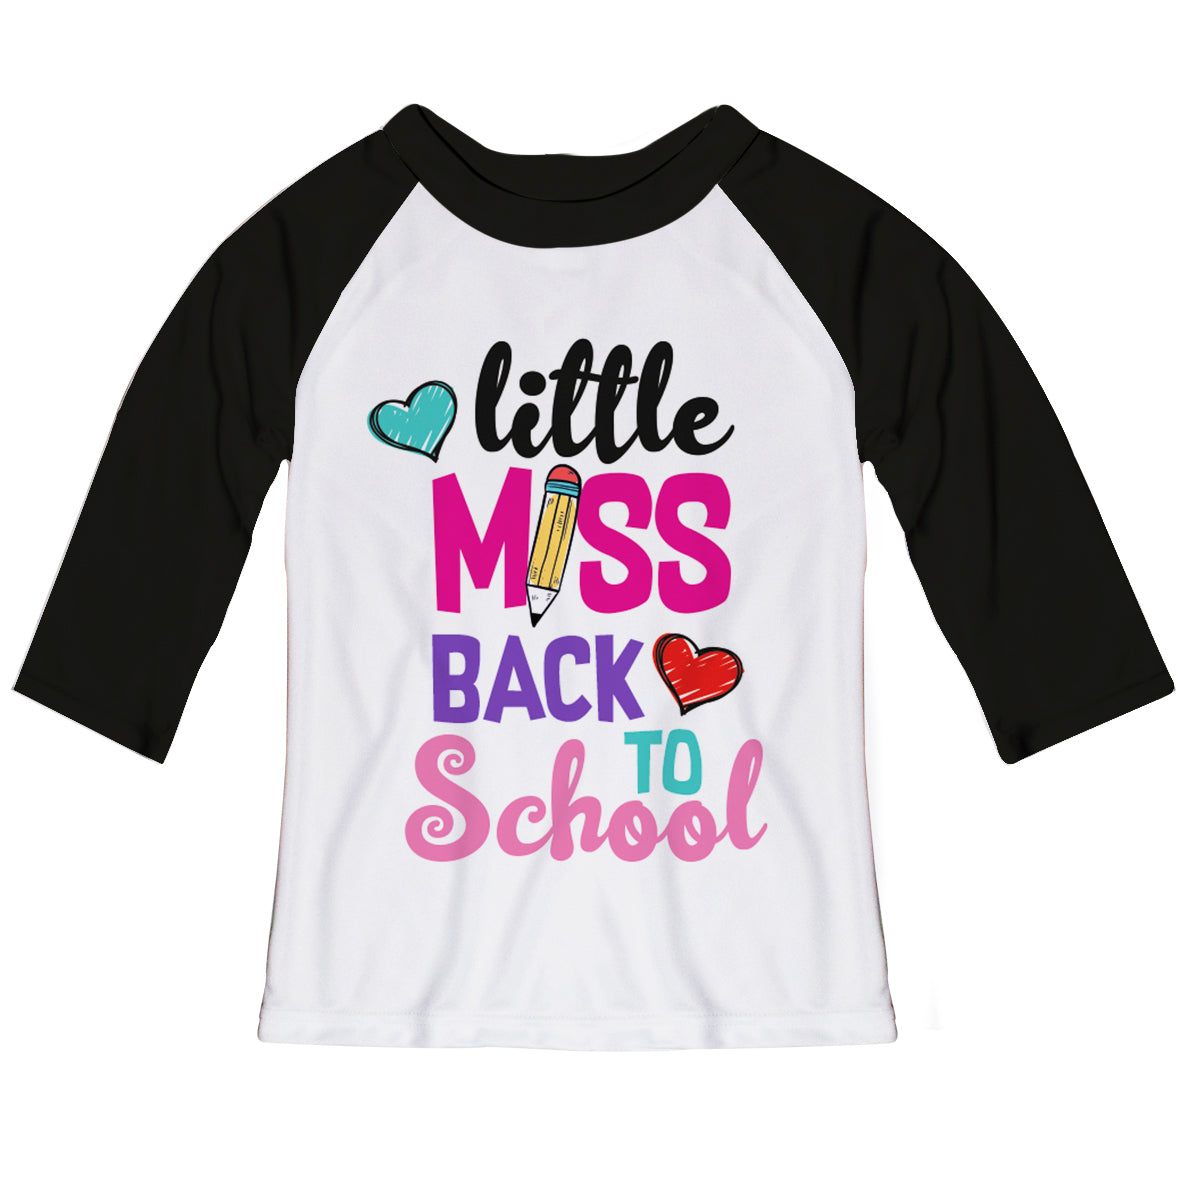 Little Miss Back To School White And Black Raglan Tee Shirt 3/4 Sleeve